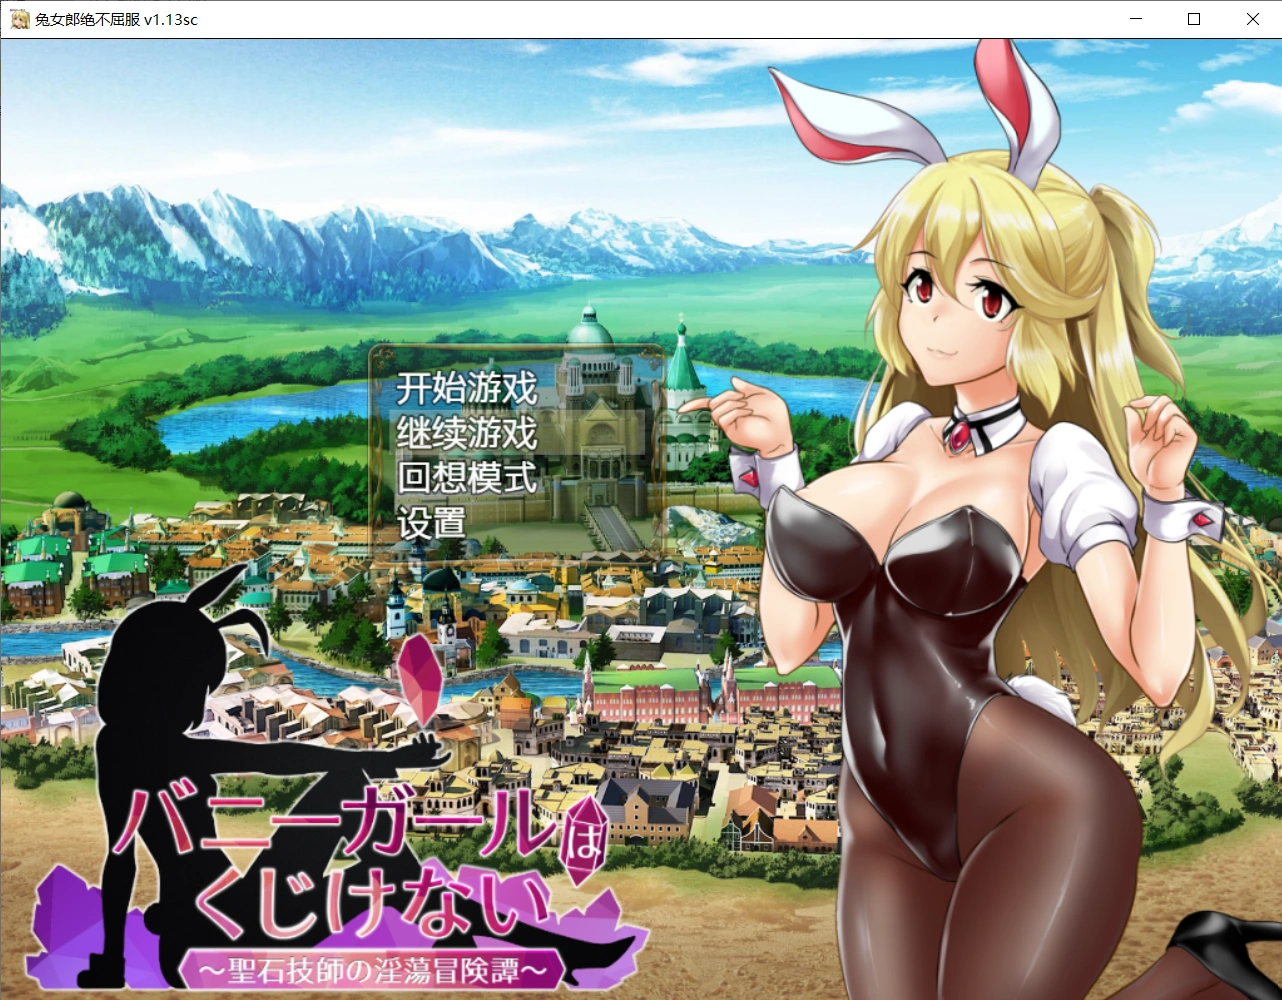 【RPG/中文】兔女郎绝不屈服 Ver1.13SC 官方中文版+全CG回想【PC/1.3G】-小皮ACG-二次元资源分享